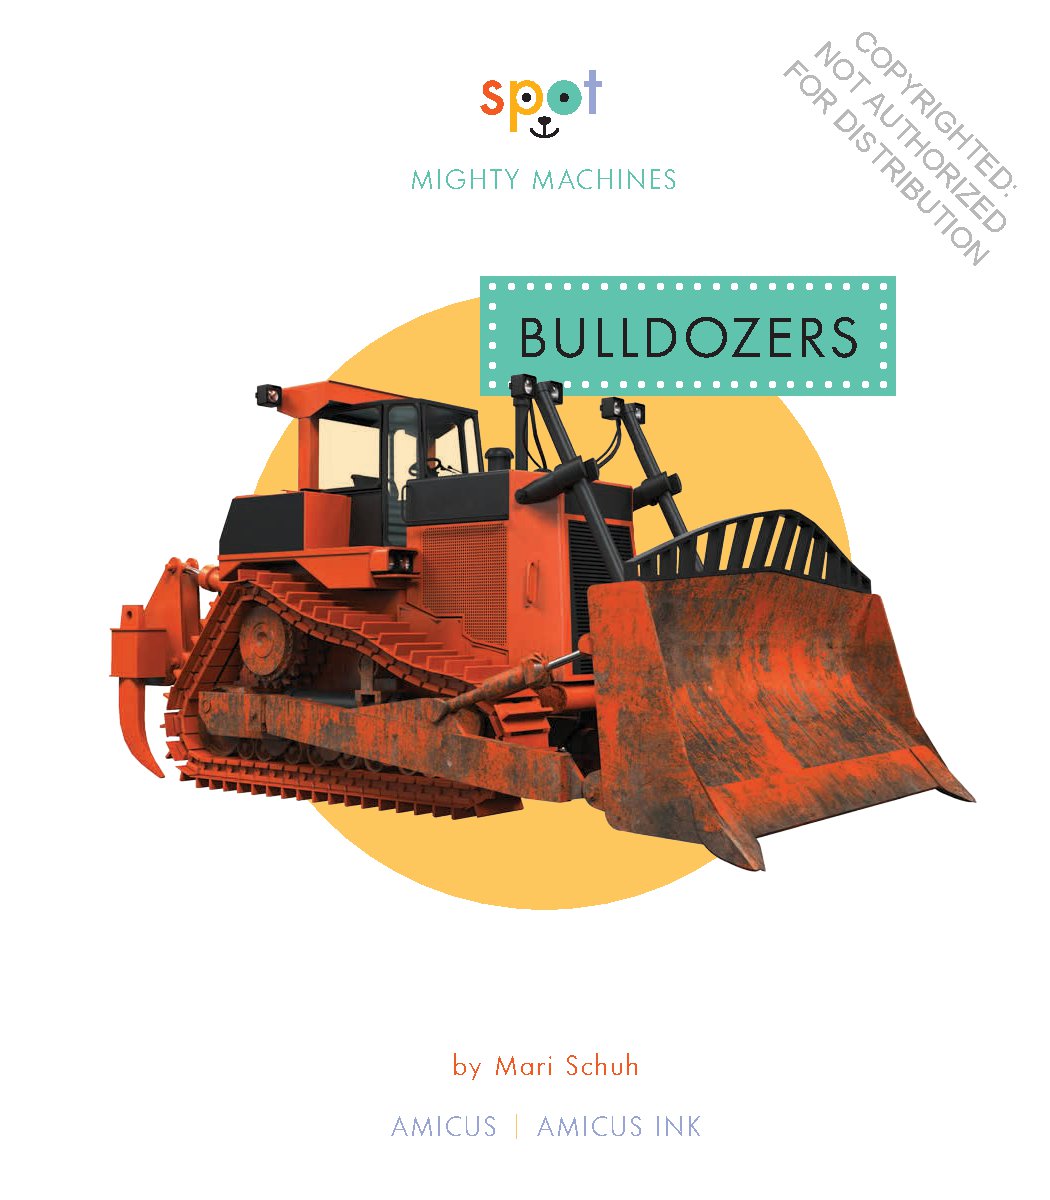 Bulldozers